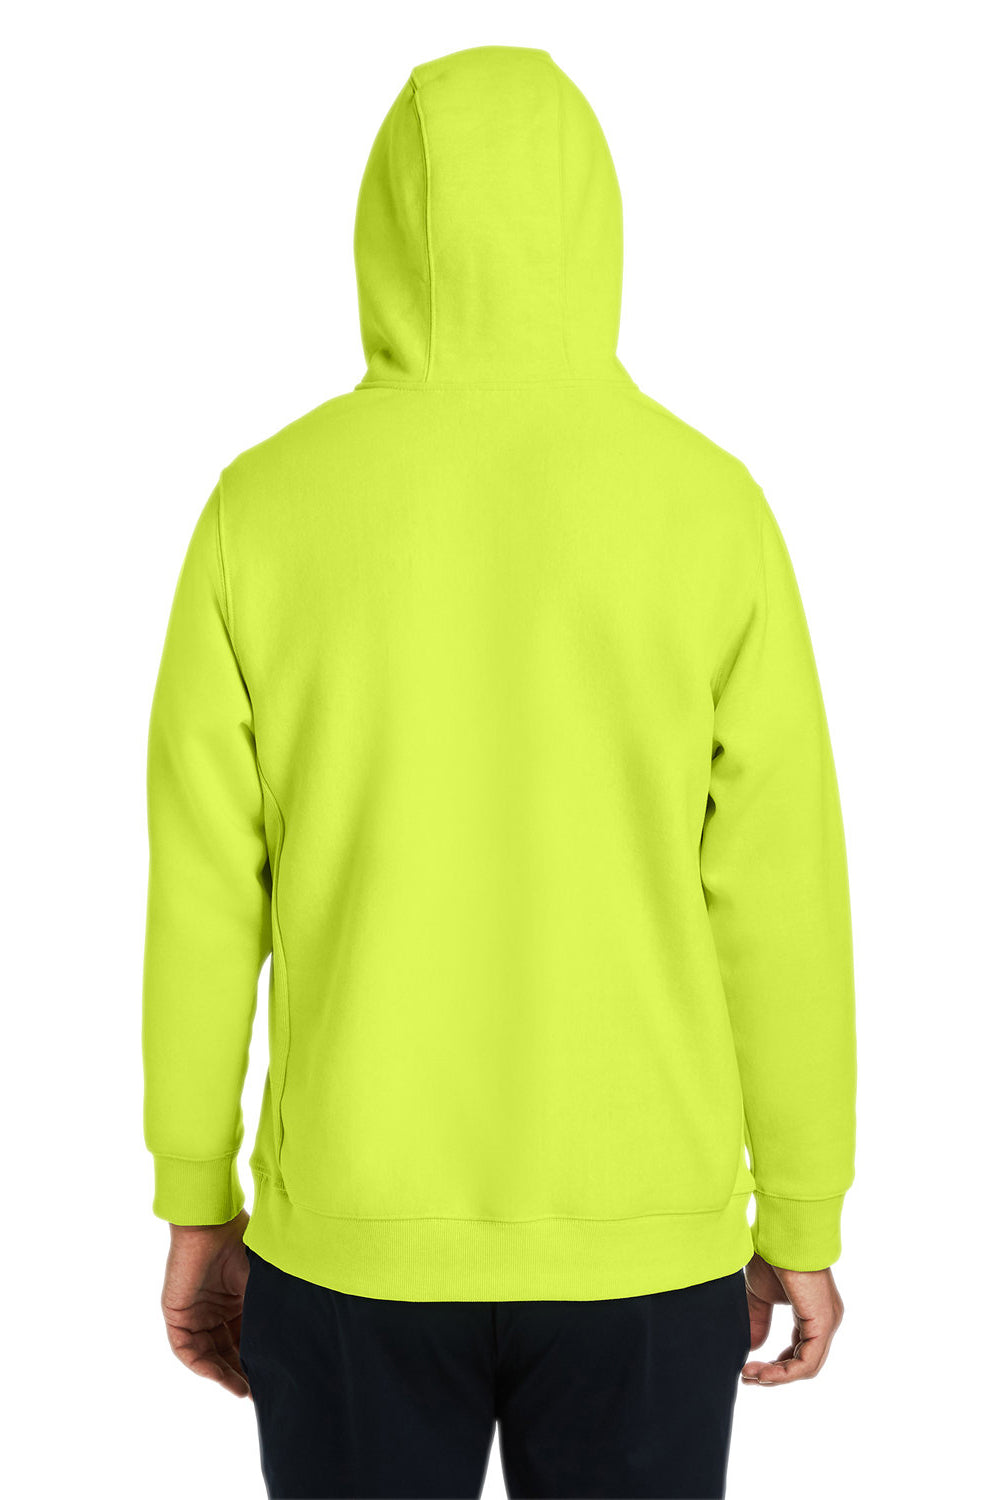 Team 365 TT97 Mens Zone HydroSport 1/4 Zip Hooded Sweatshirt Hoodie Safety Yellow Back